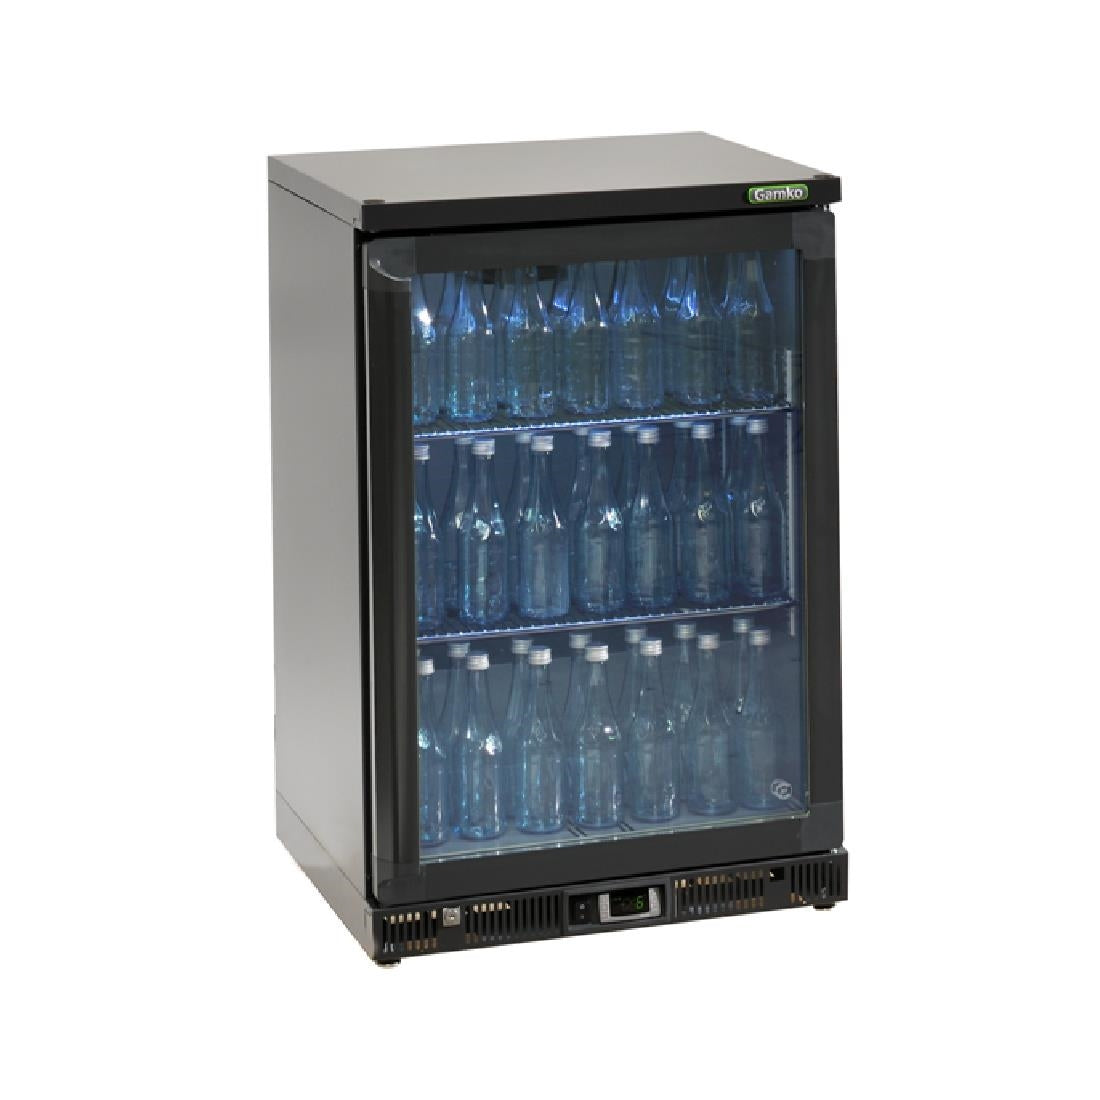 Gamko Single Door Back Bar Cooler JD Catering Equipment Solutions Ltd